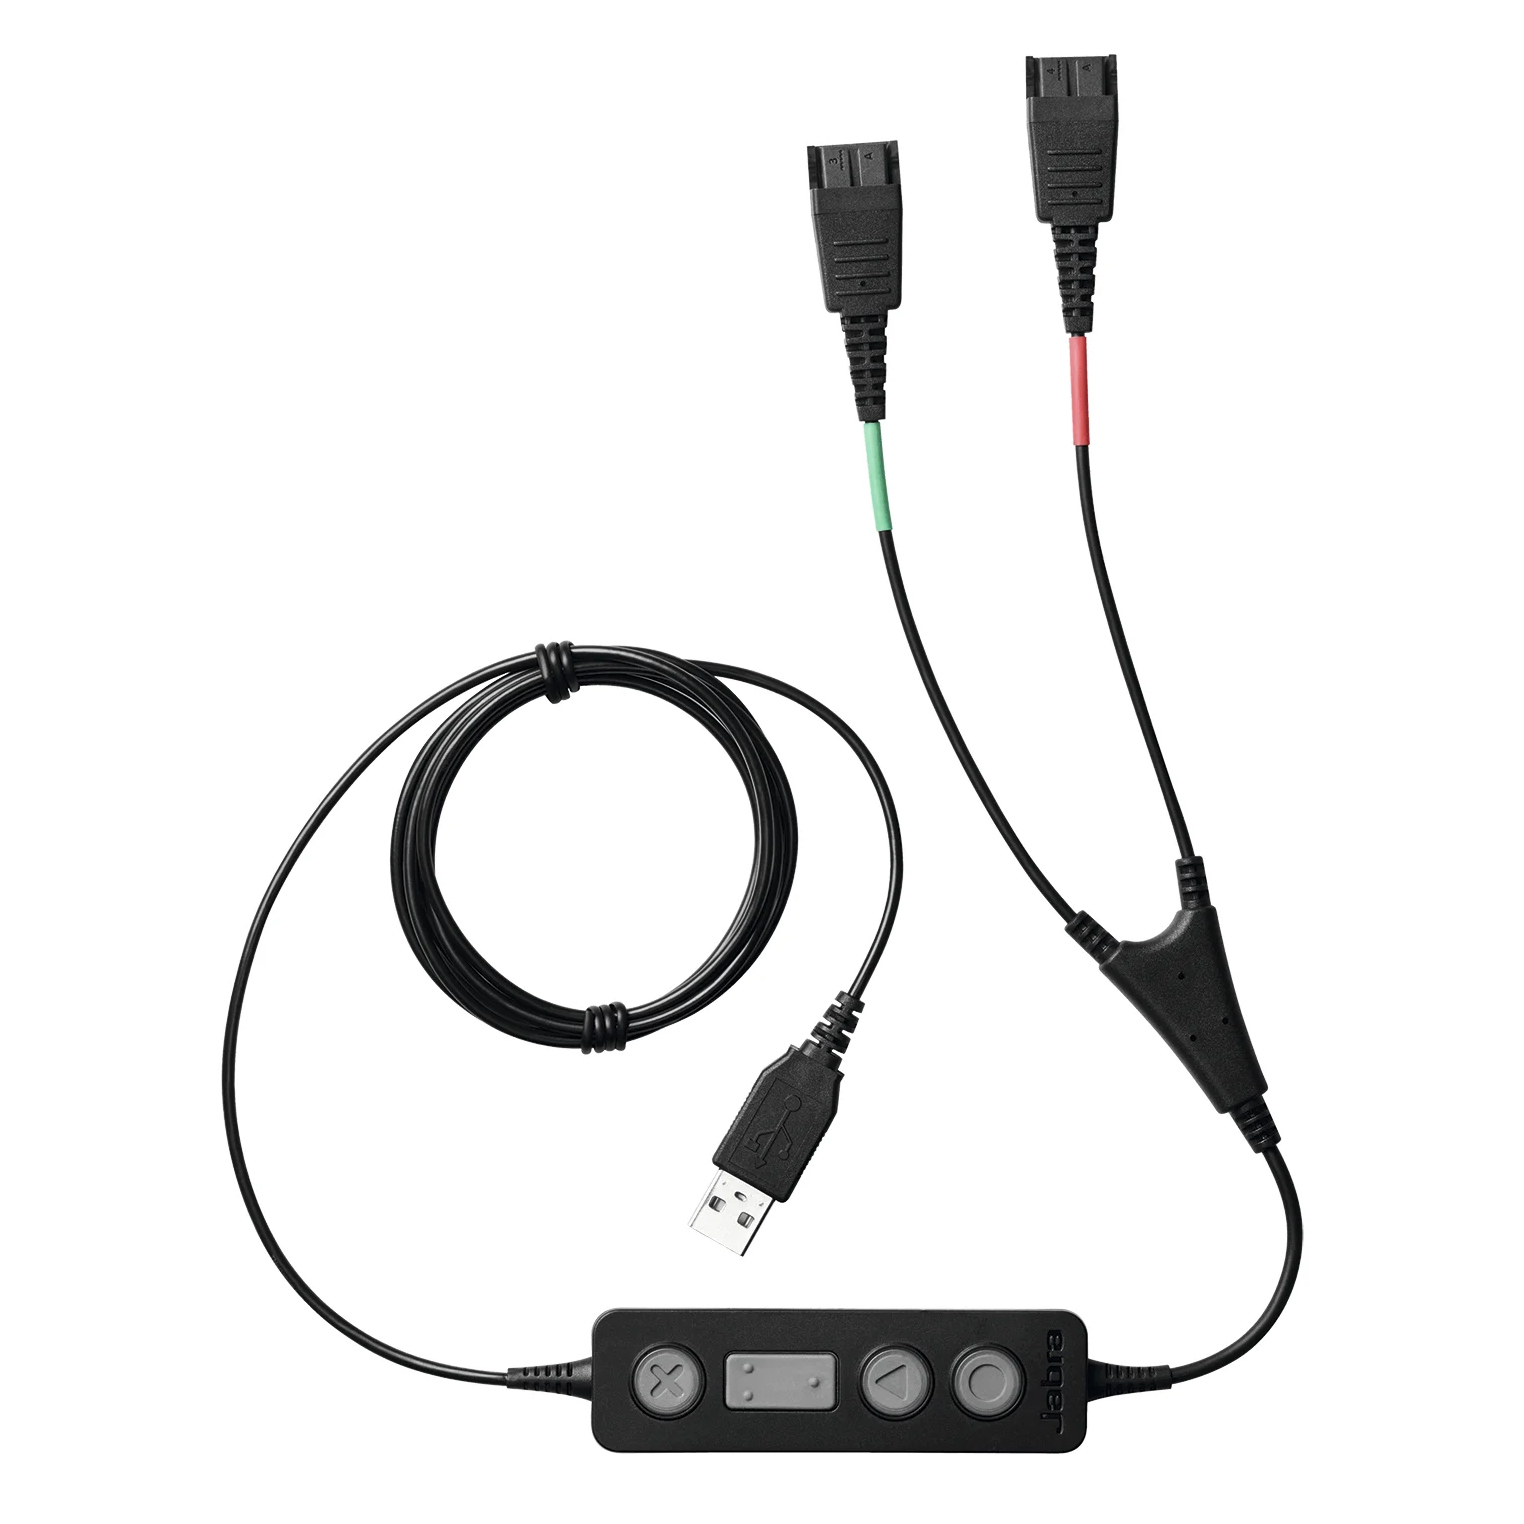 Jabra LINK 265 USB Supervisor cord